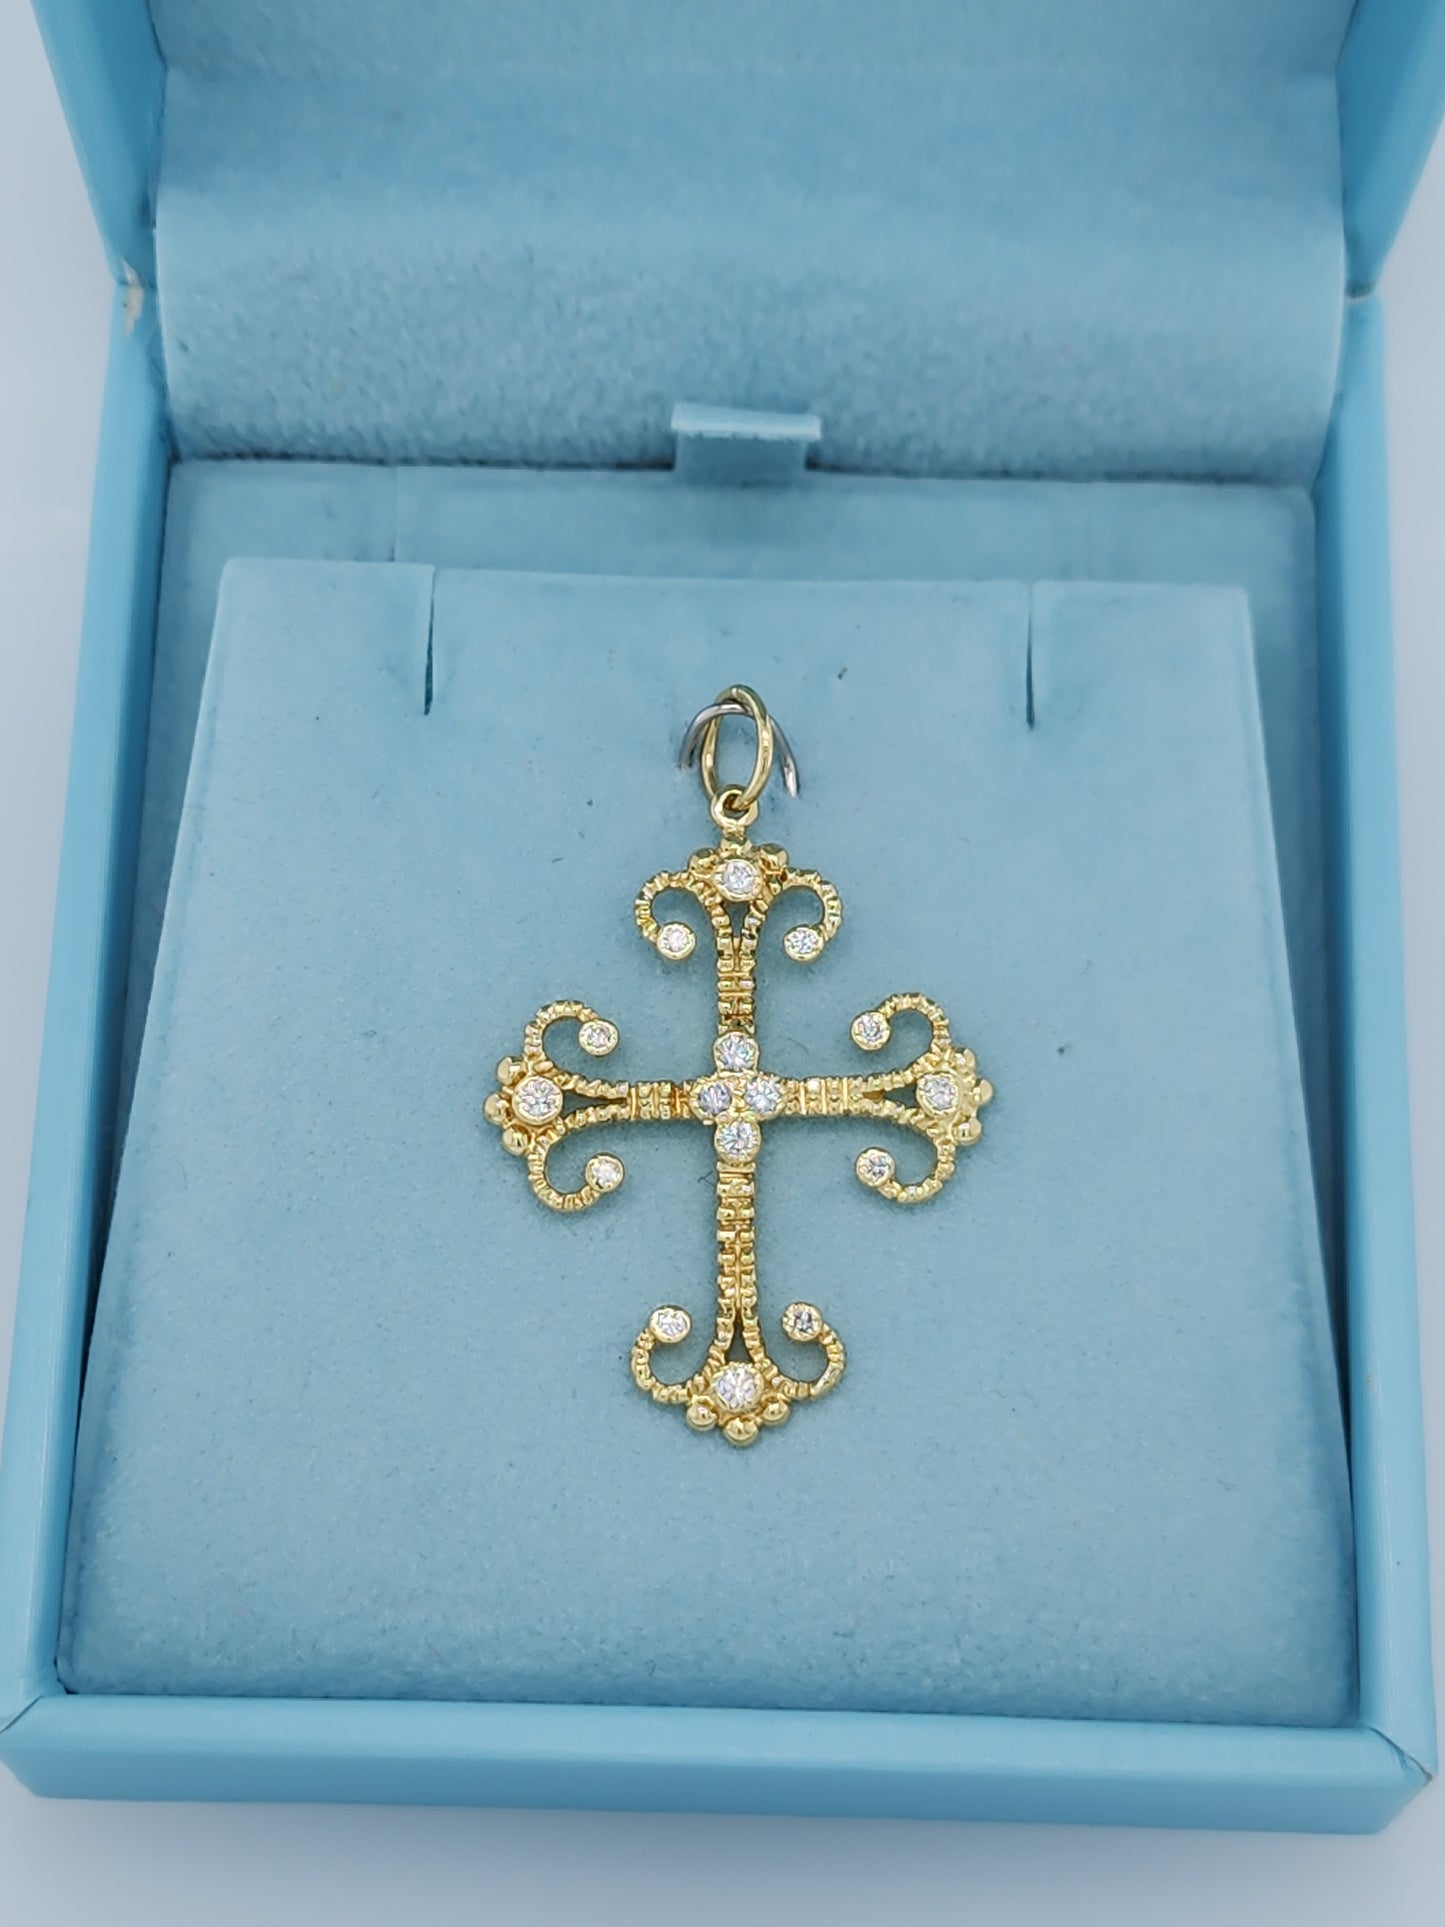 Fleur de Lis Design Cross Pendant with 1/6 ct Bezel Set Diamonds in 18k Yellow Gold